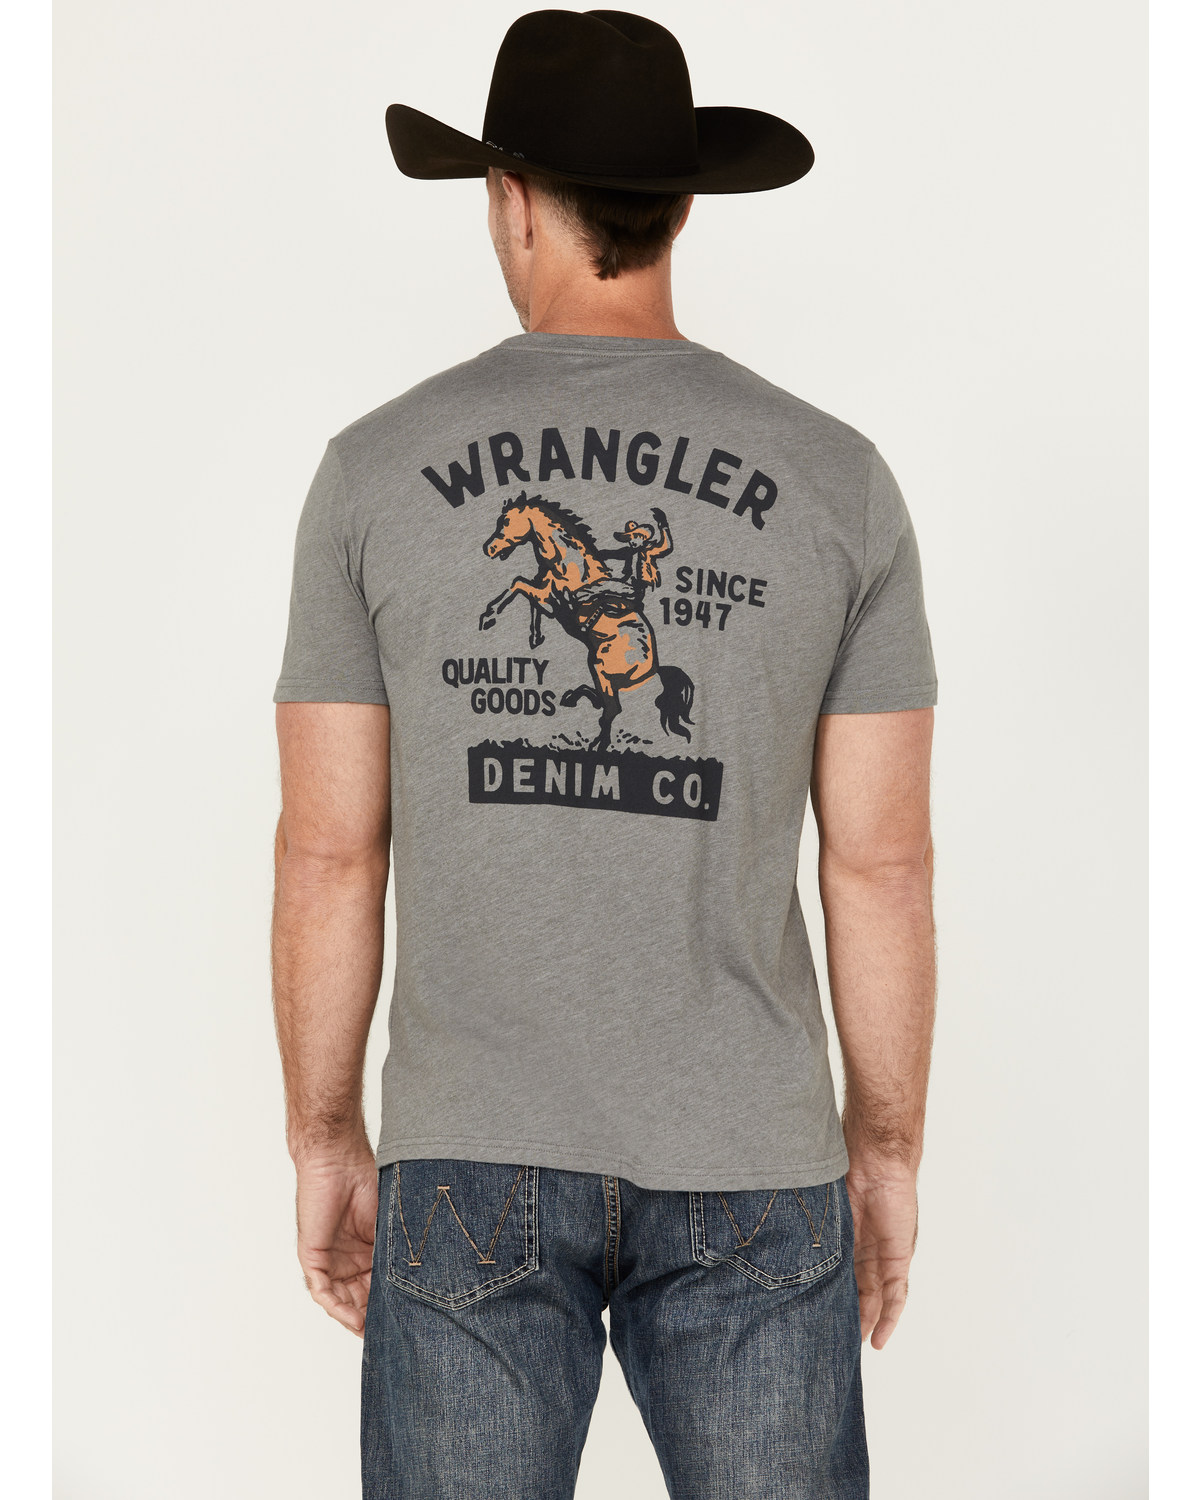 Wrangler Men's Cowboy Logo Short Sleeve Graphic T-Shirt